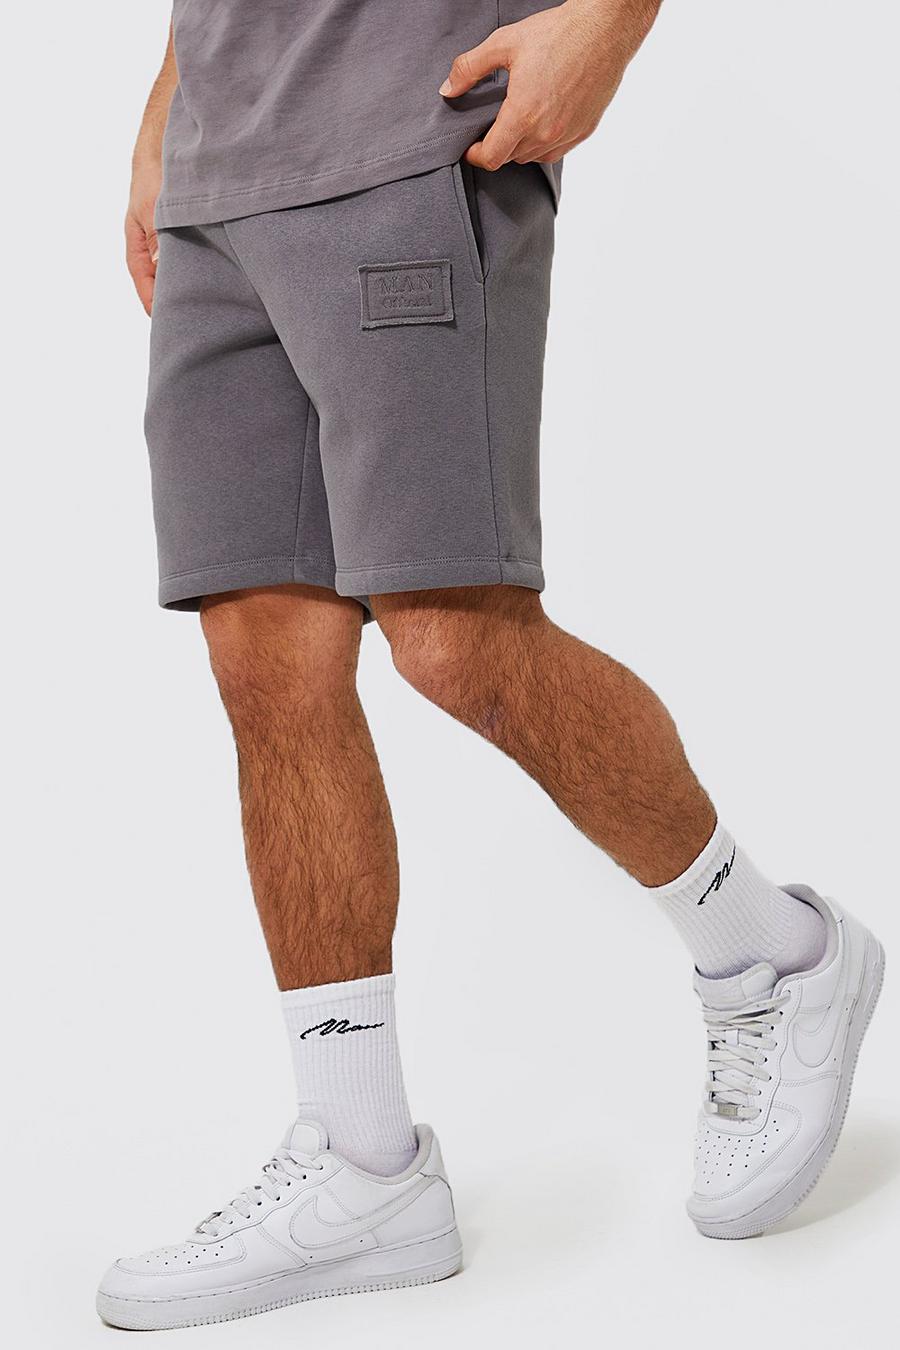 Mittellange zerrissene Slim-Fit Shorts, Charcoal gris